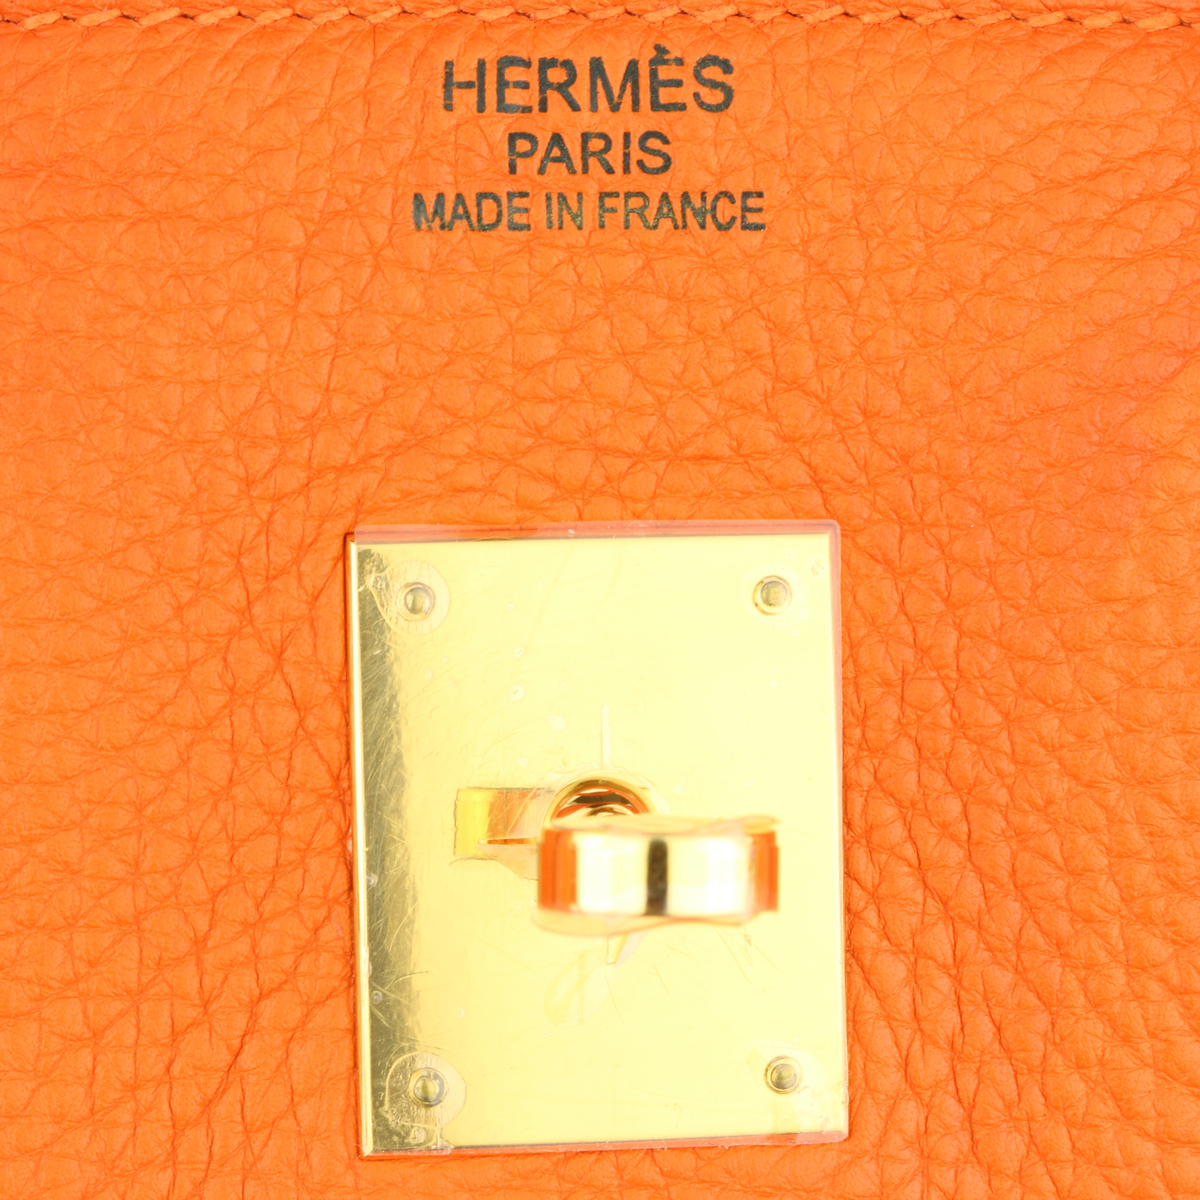 Authenticated Used Hermes Birkin 30 3EN1 handbag Togo/Swift/Toile gold  silver metal fittings U stamp 